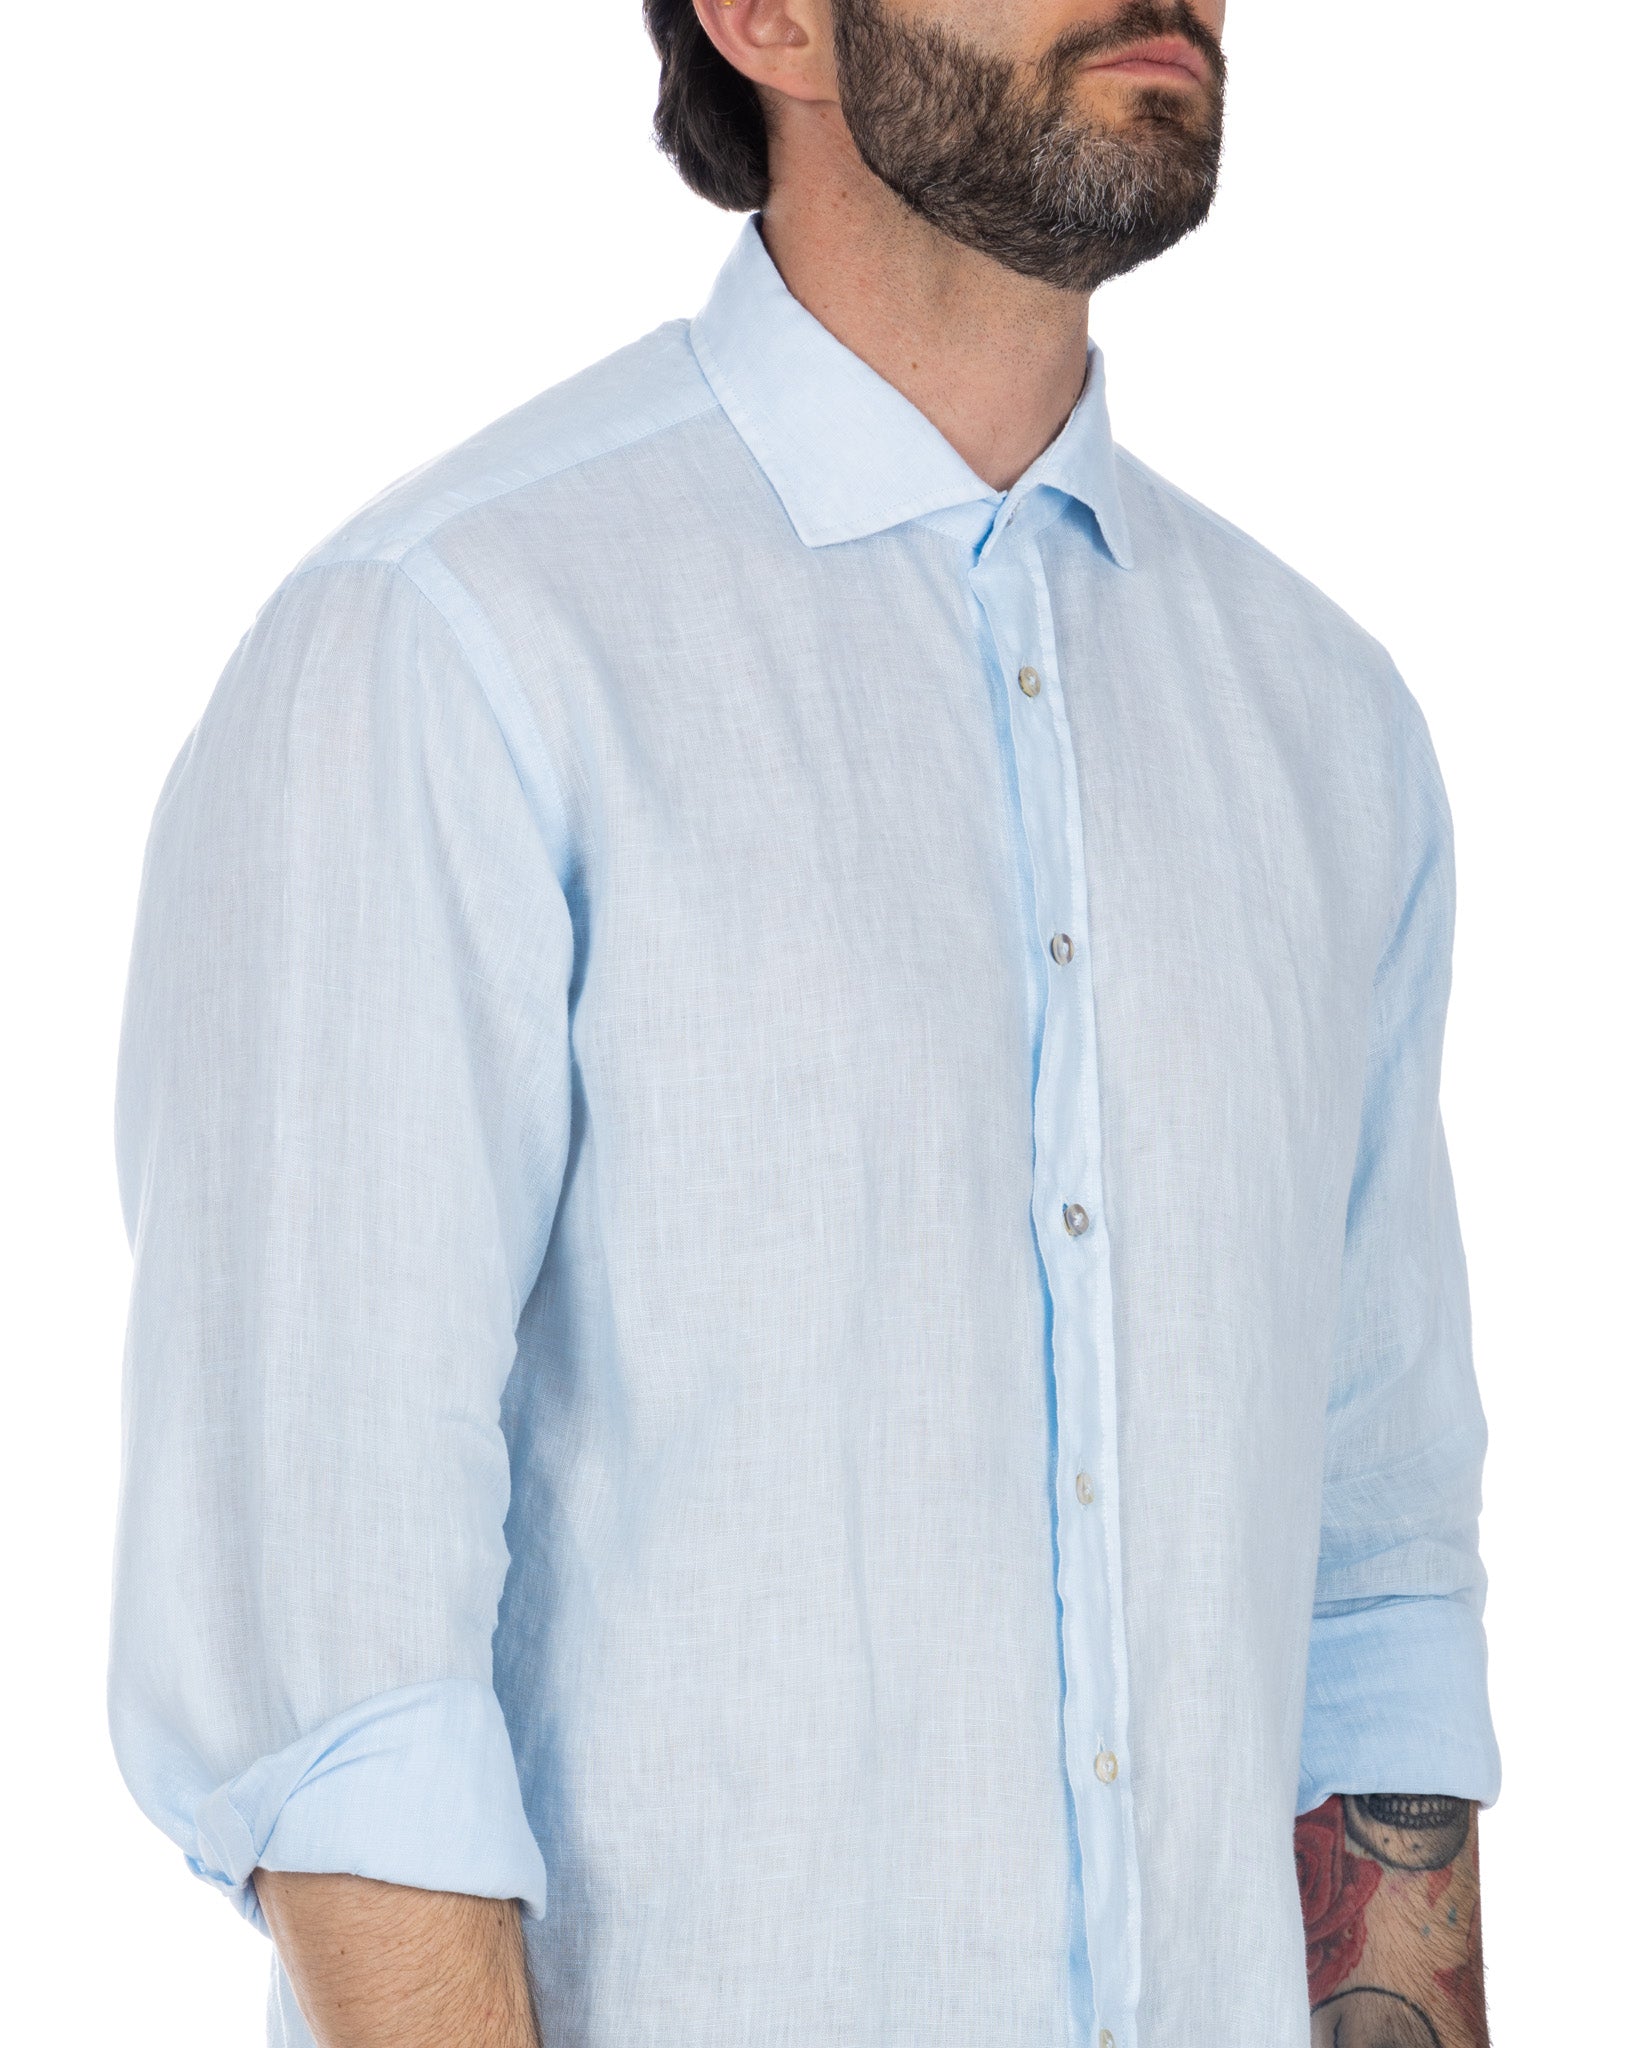 Montecarlo - sky pure linen shirt